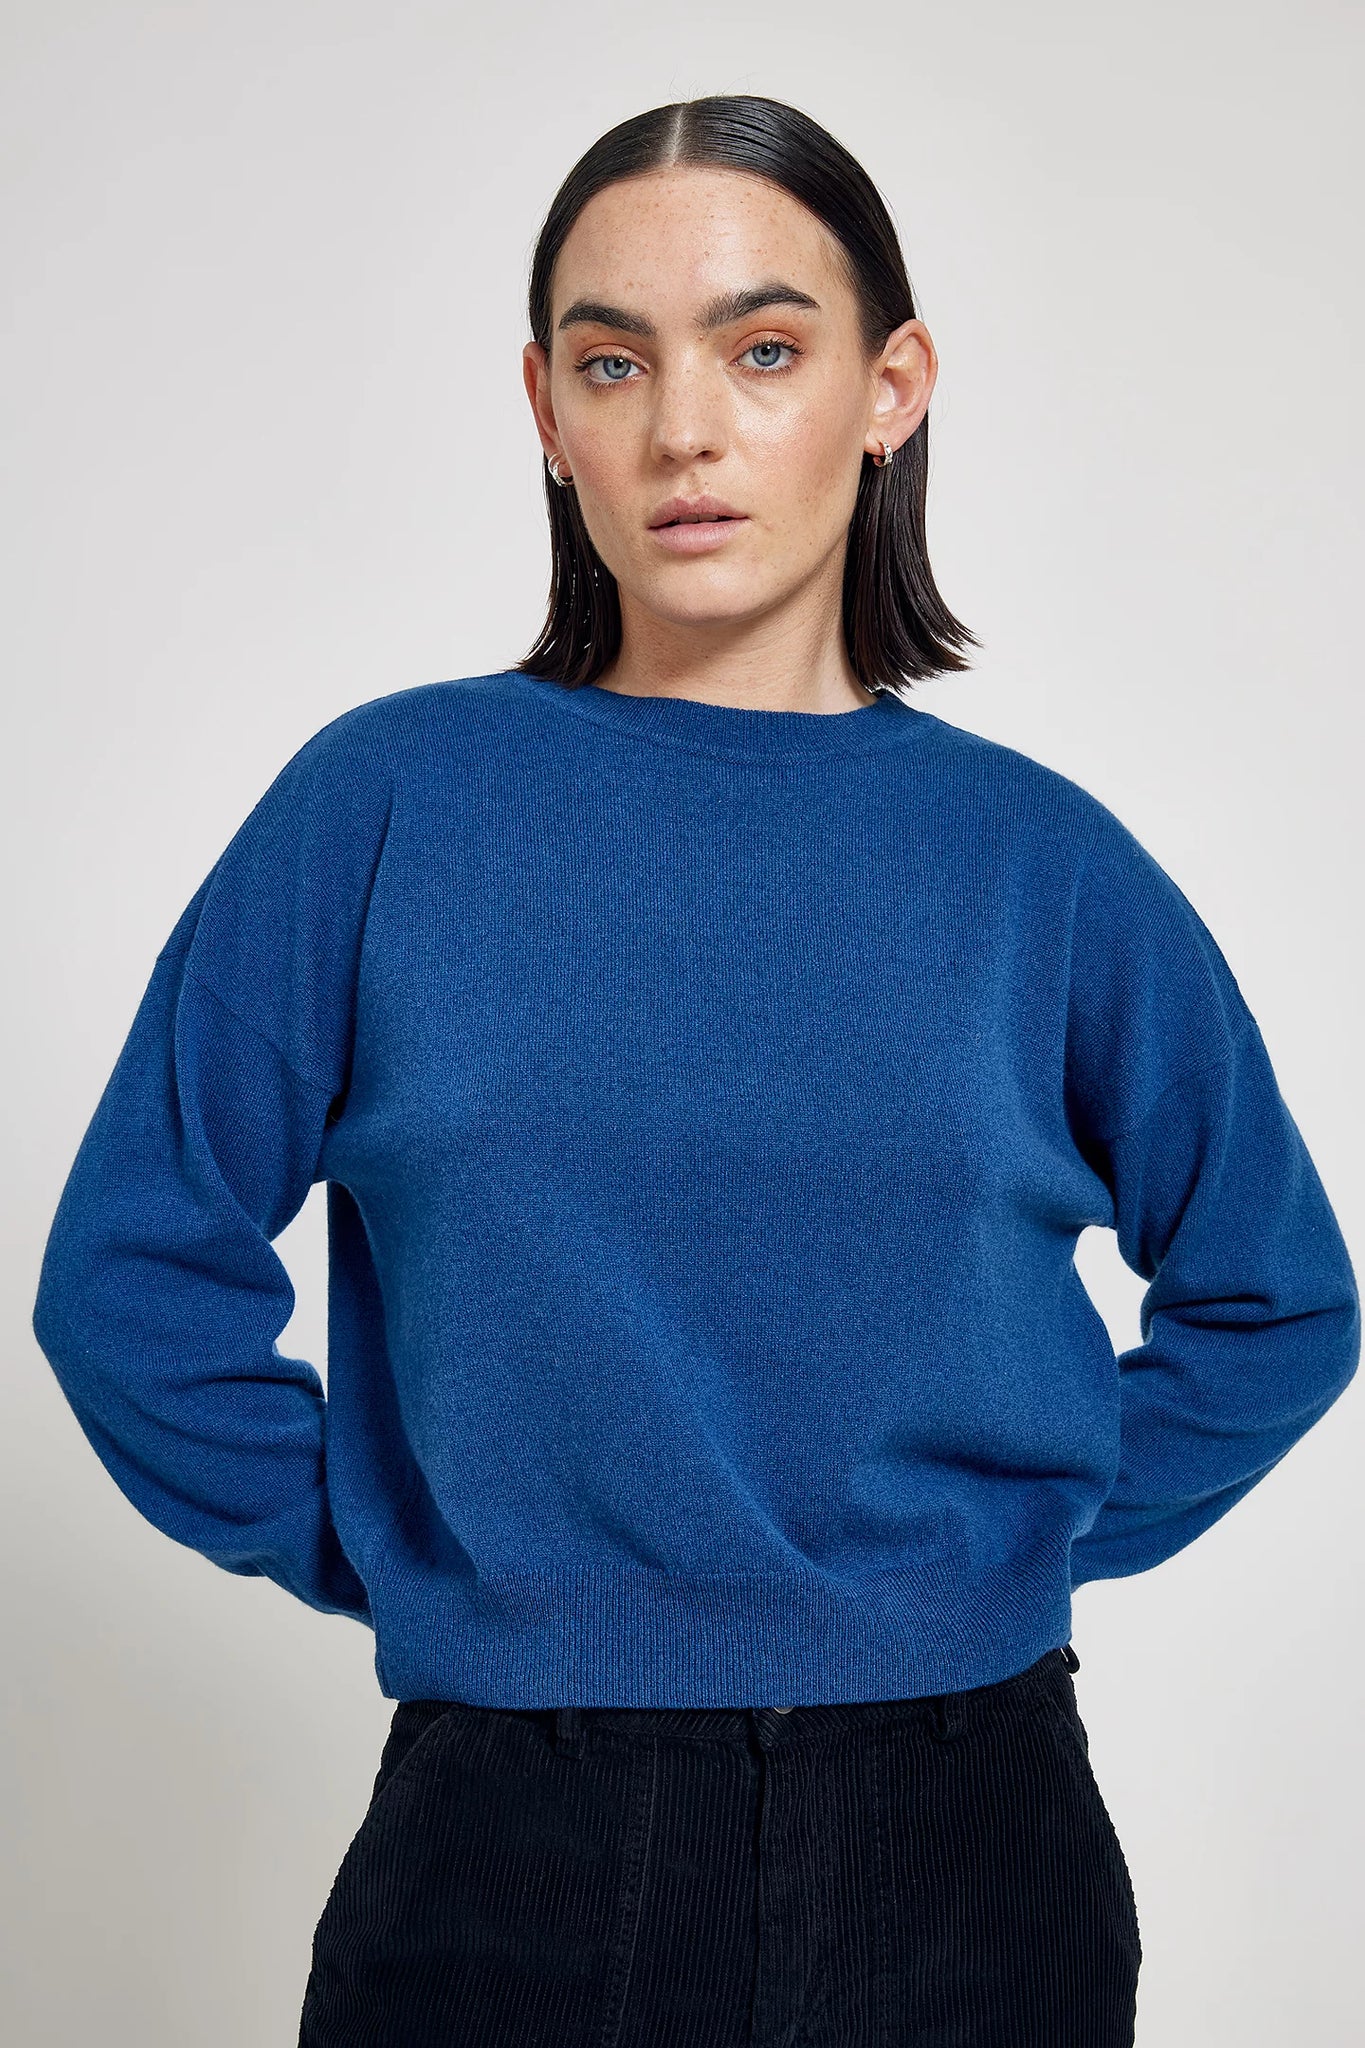 Ior cashmere wool sweater – Lazuli blue